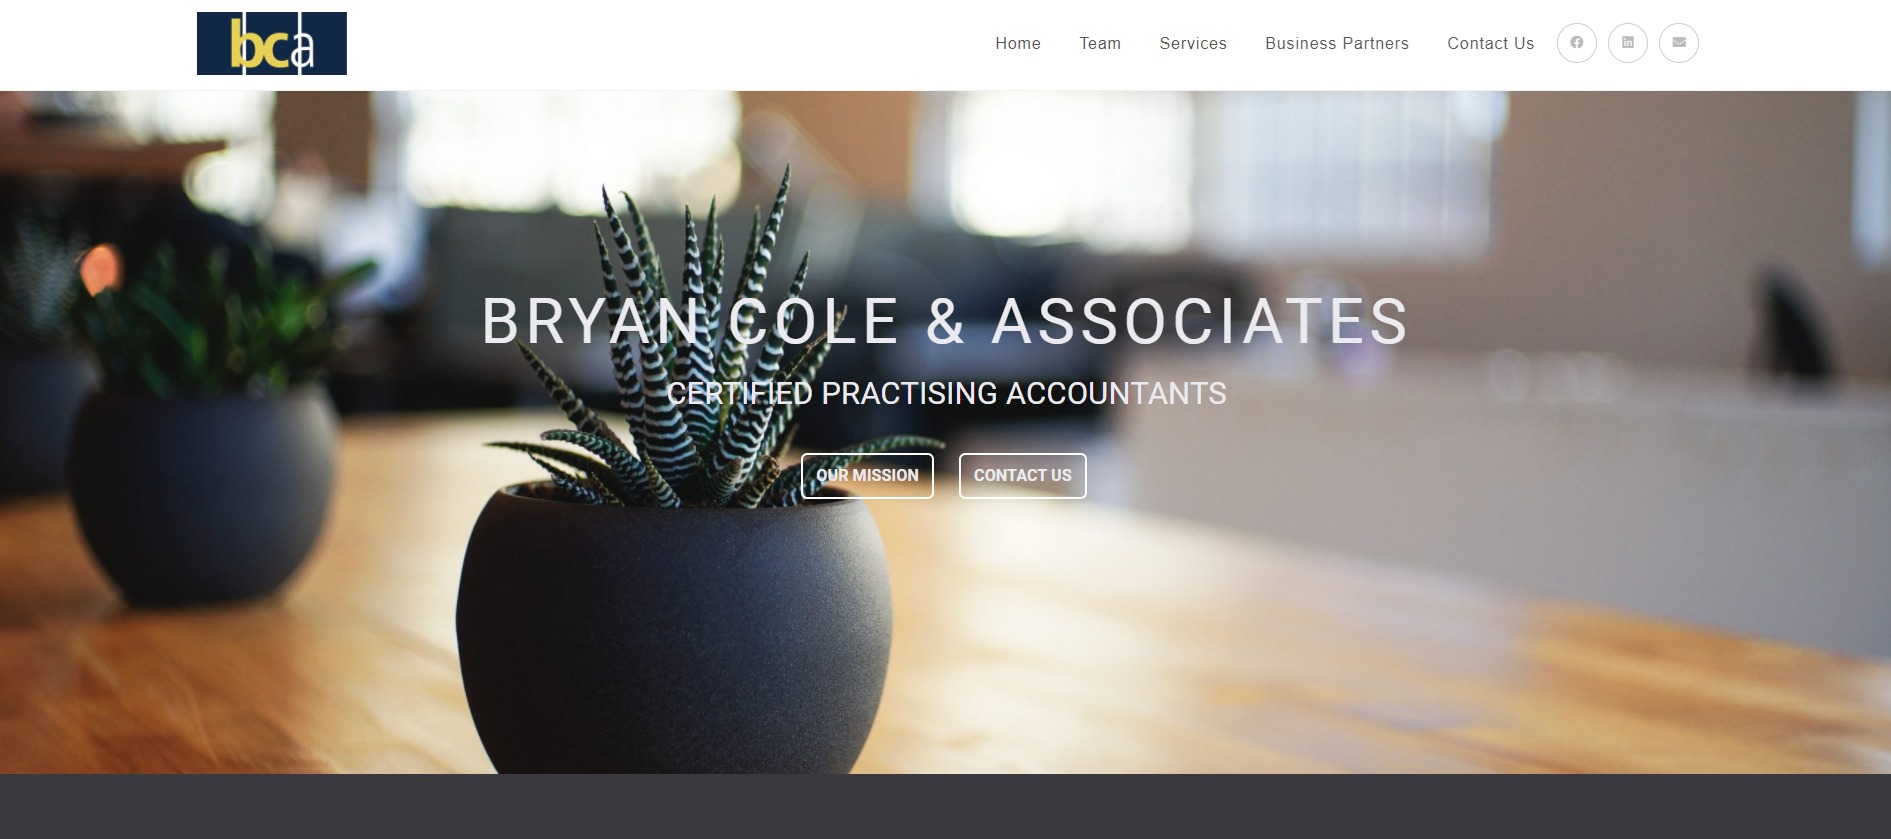 Bryan Cole & Associates